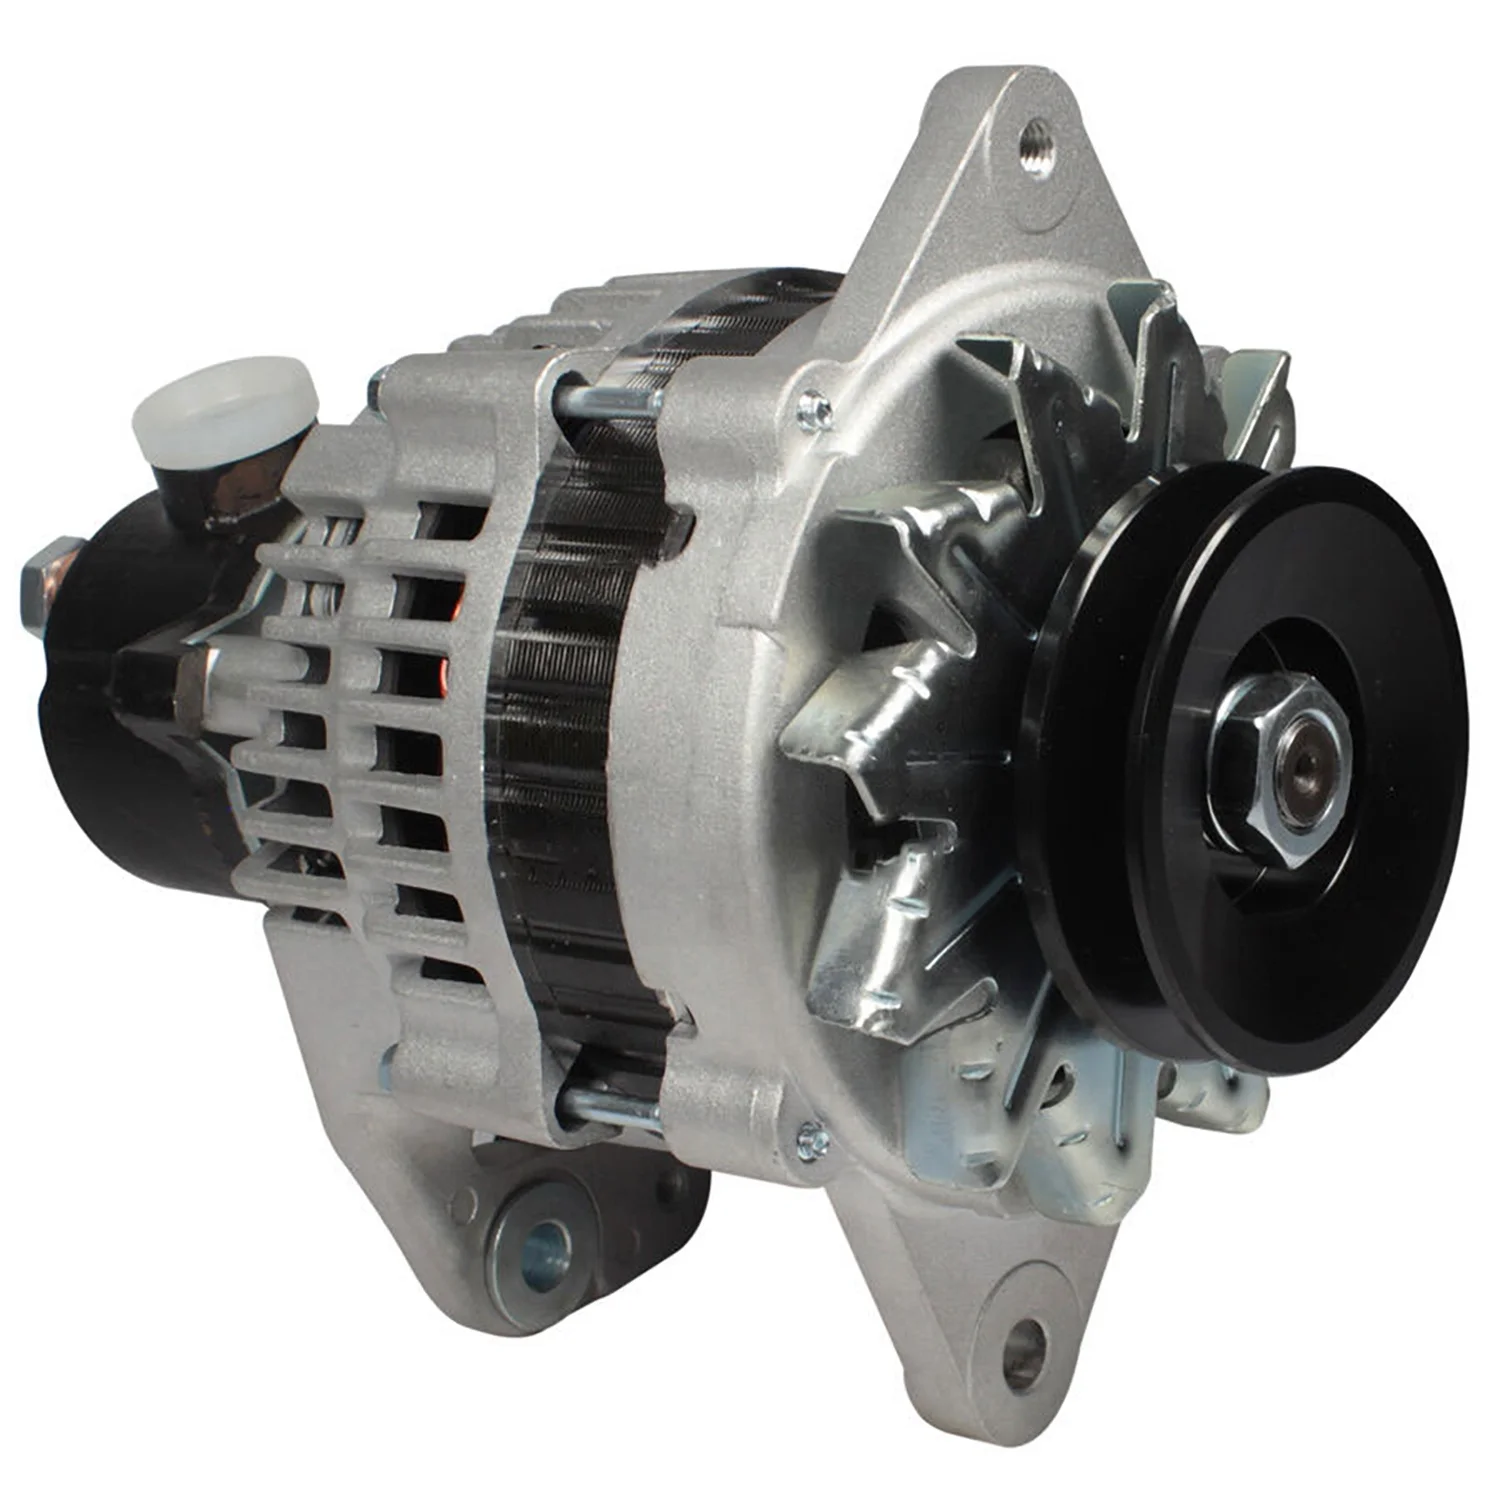 

Auto Dynamo Alternator Generator For Delco Hitachi Lucas MZD 116495 DRA0824 LR170510 LR170510B ALH8051UX LRA02029 2RS218300B